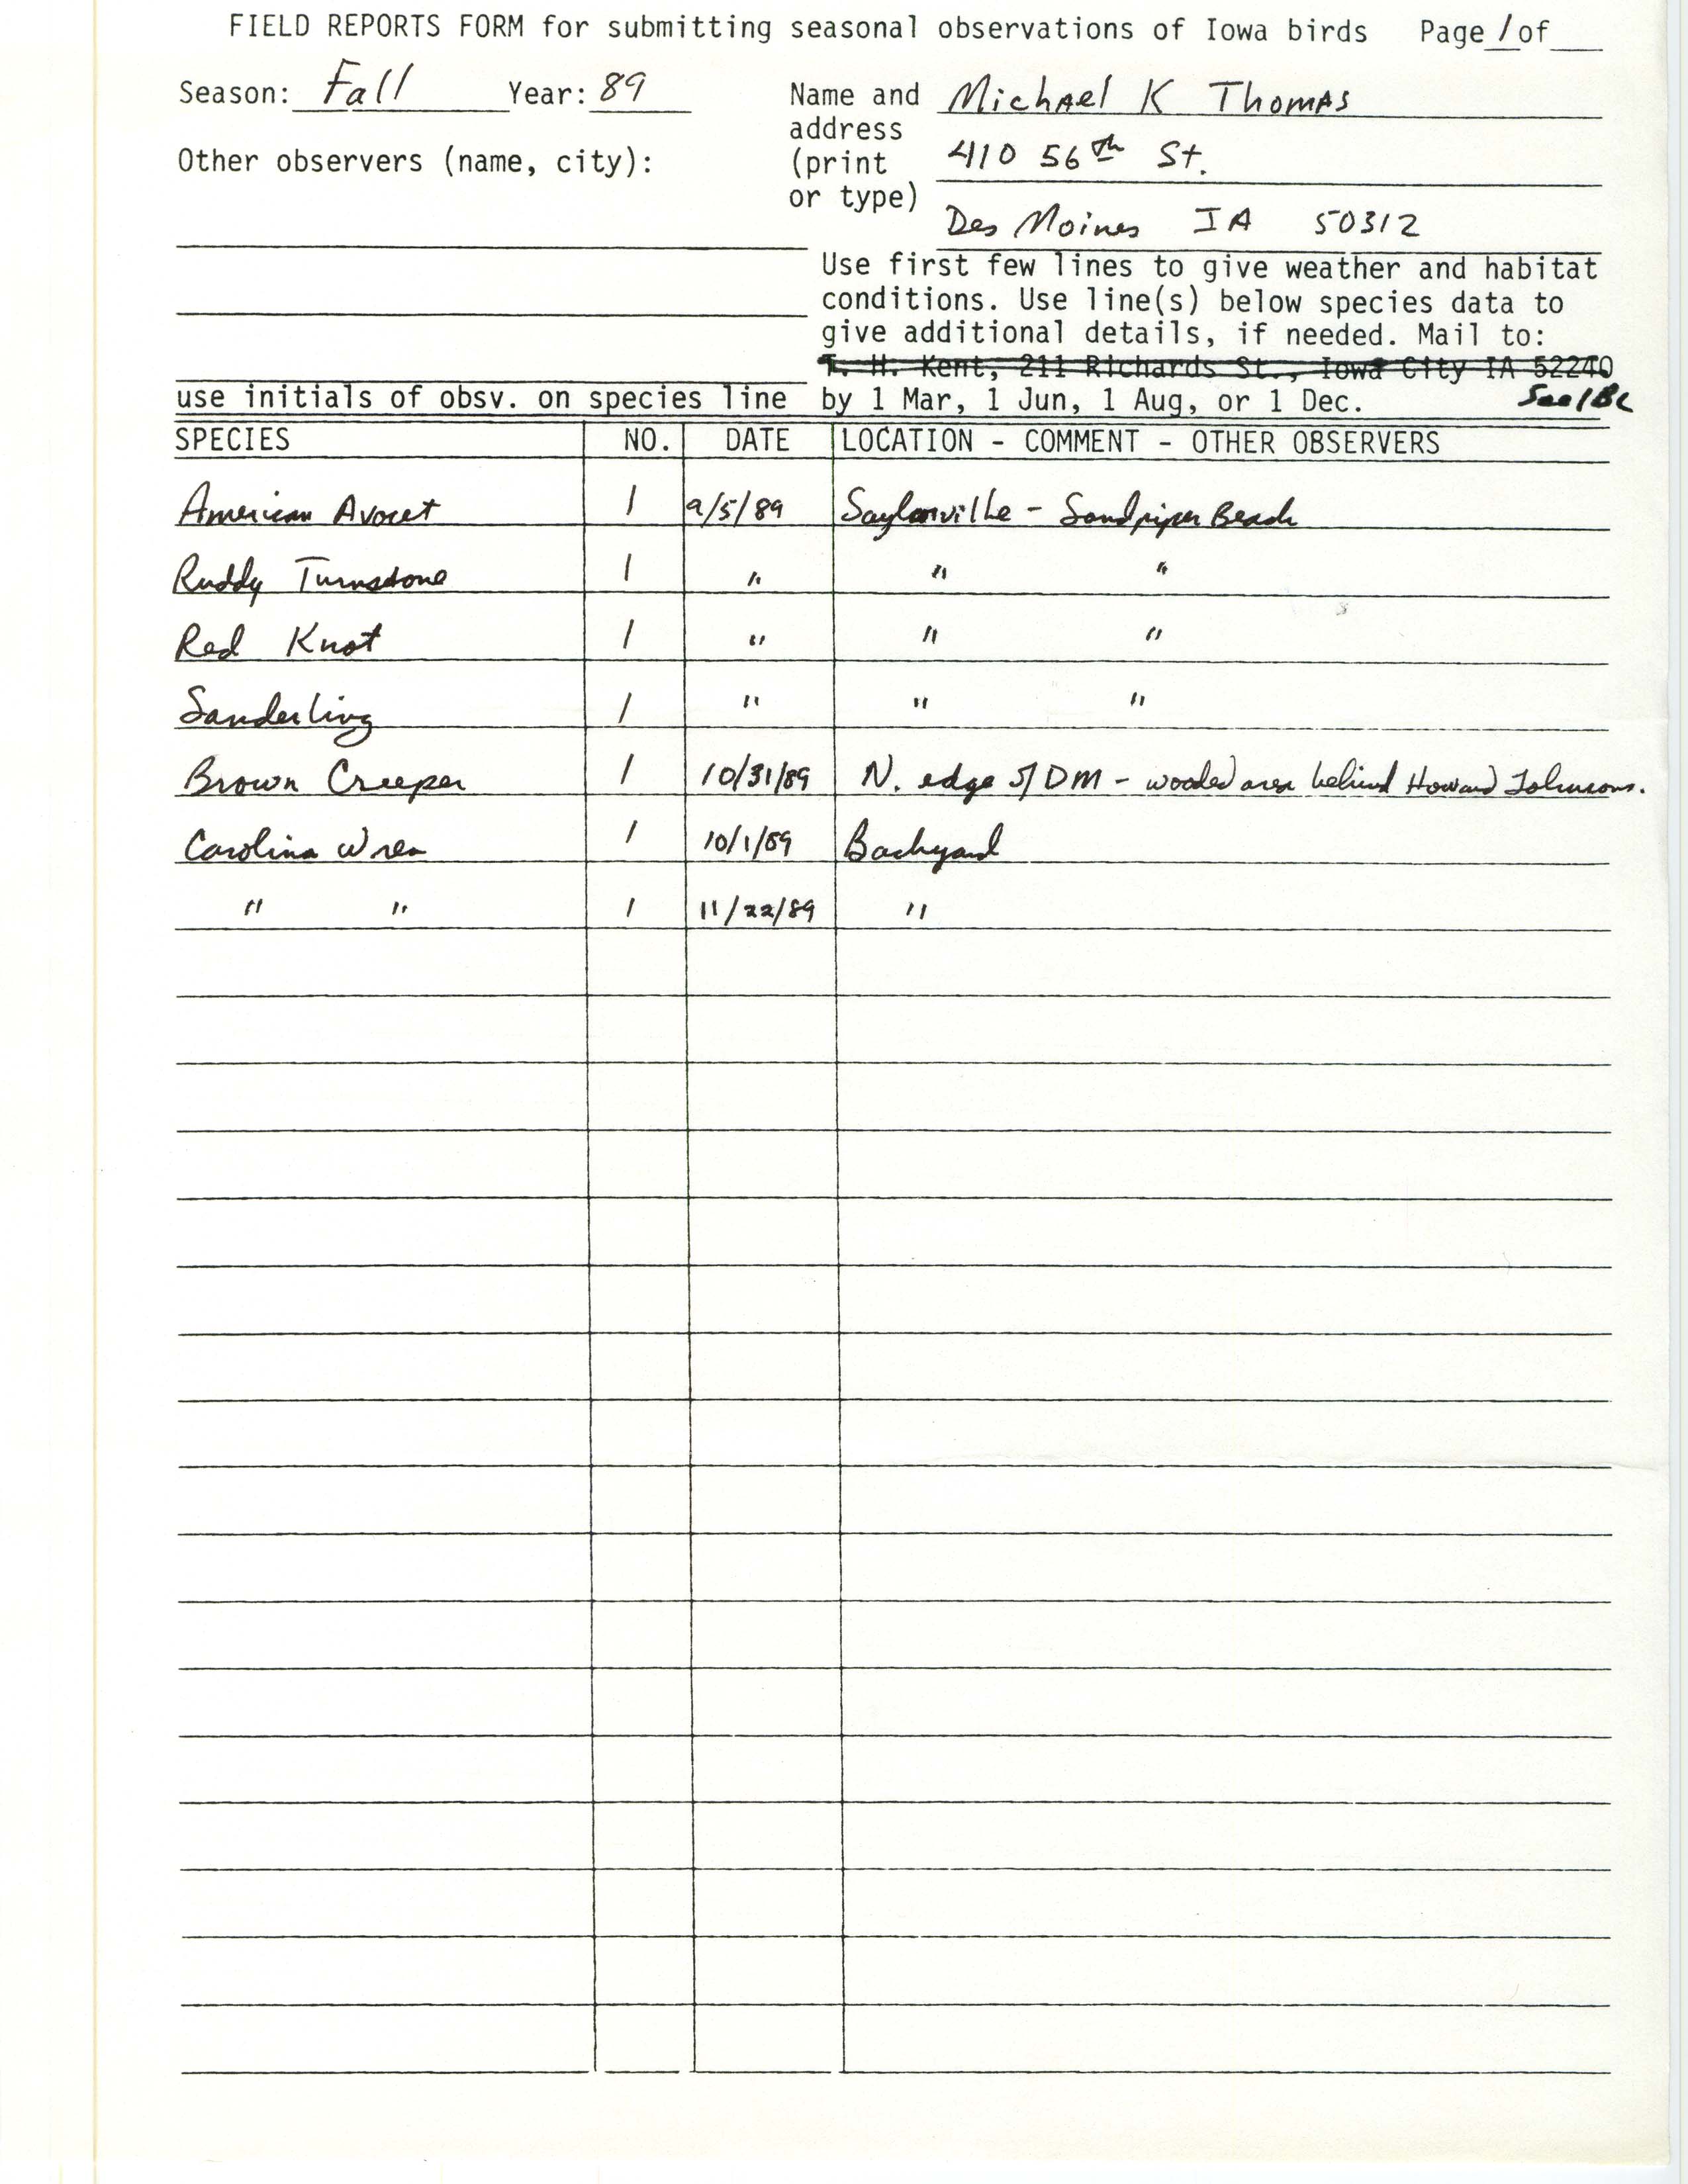 Field reports, Michael K. Thomas, fall 1989